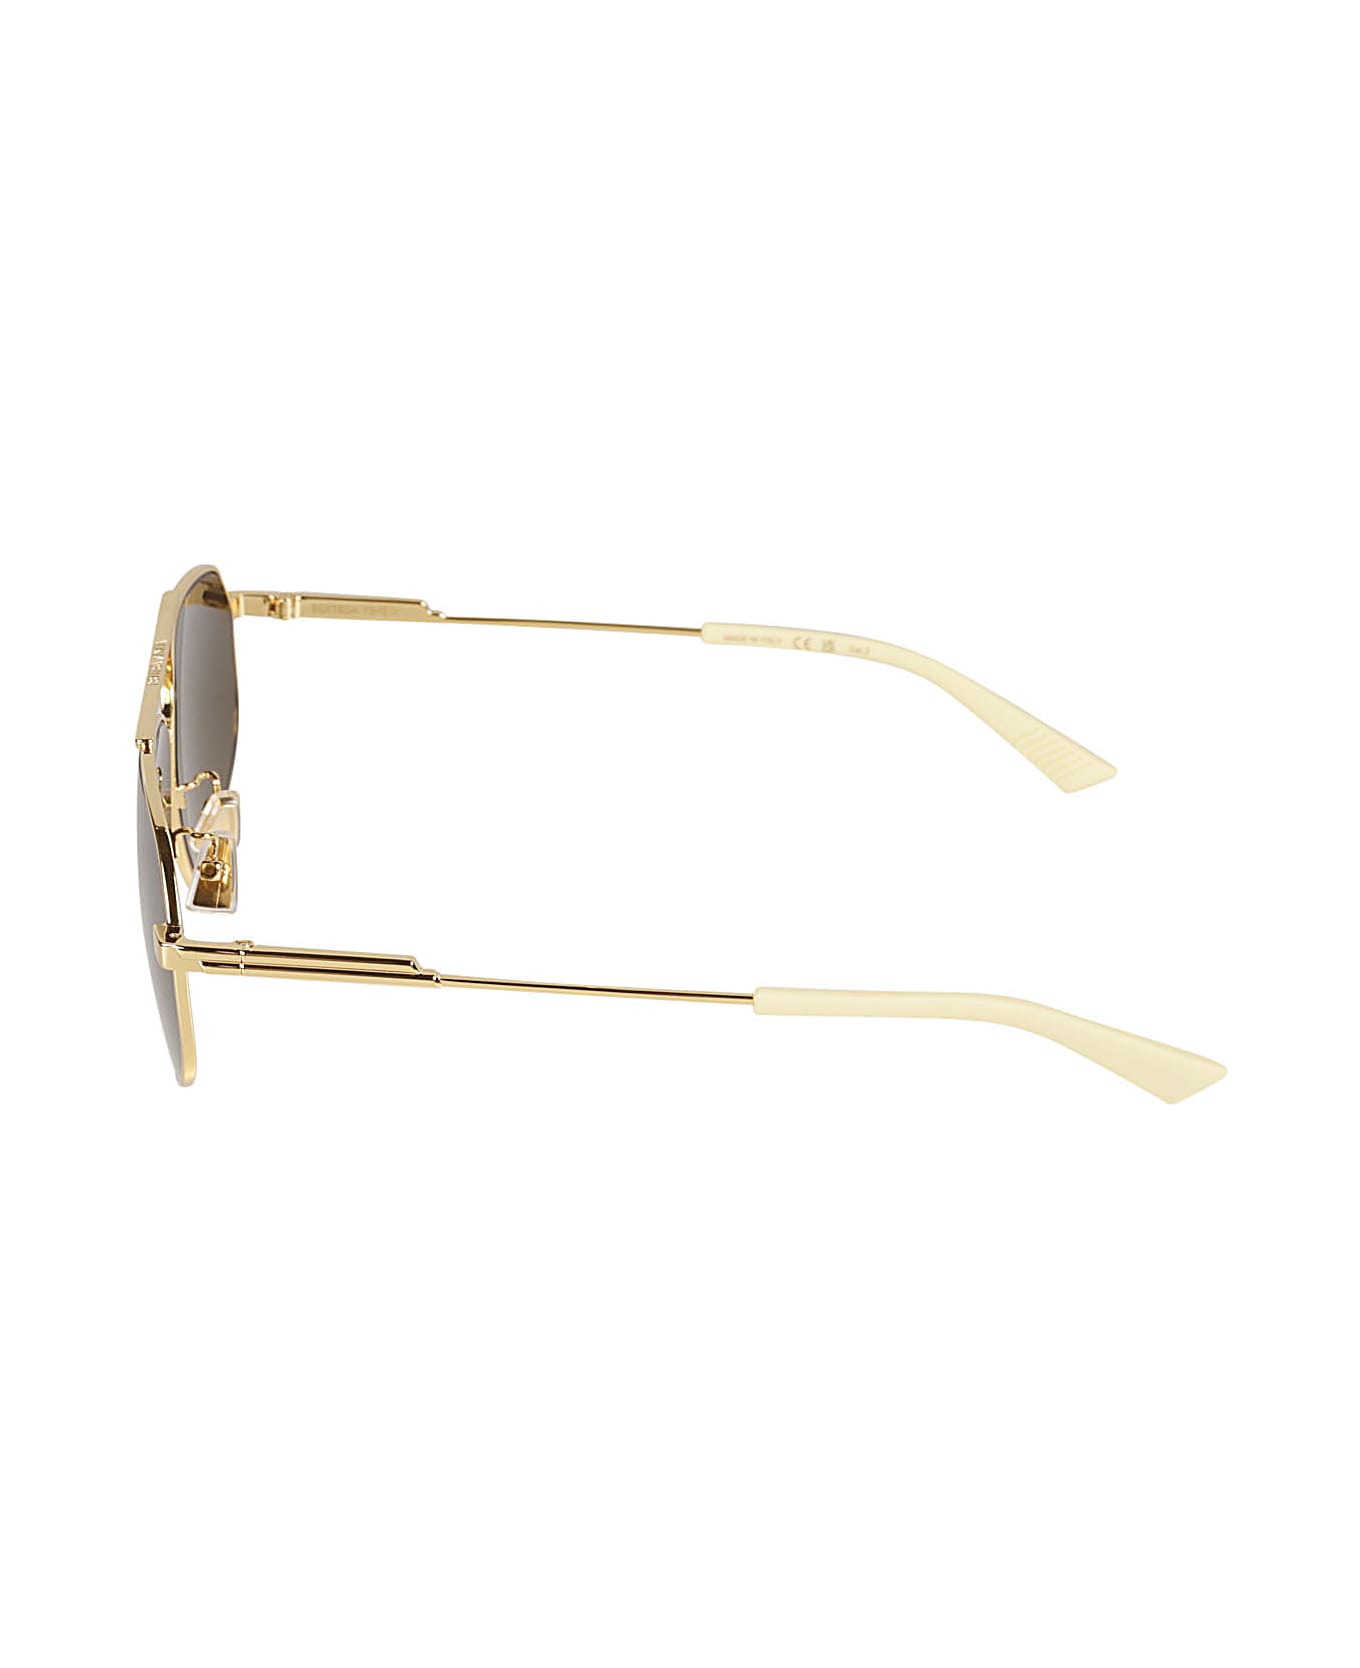 Bottega Veneta Eyewear Gold-tone Aviatore Style the Sunglasses - Gold/Brown